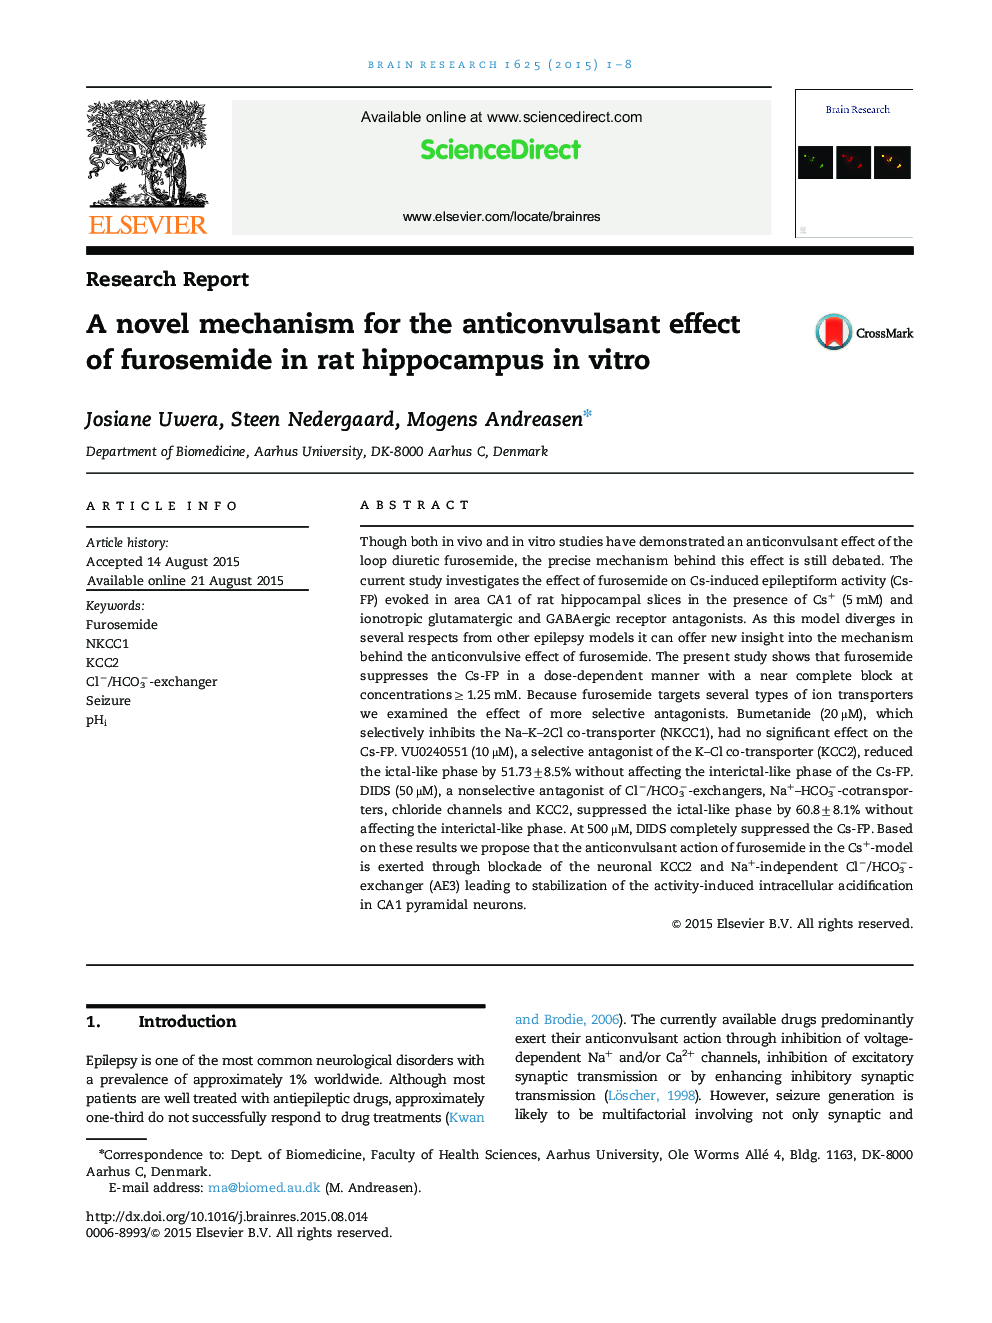 Research ReportA novel mechanism for the anticonvulsant effect of furosemide in rat hippocampus in vitro